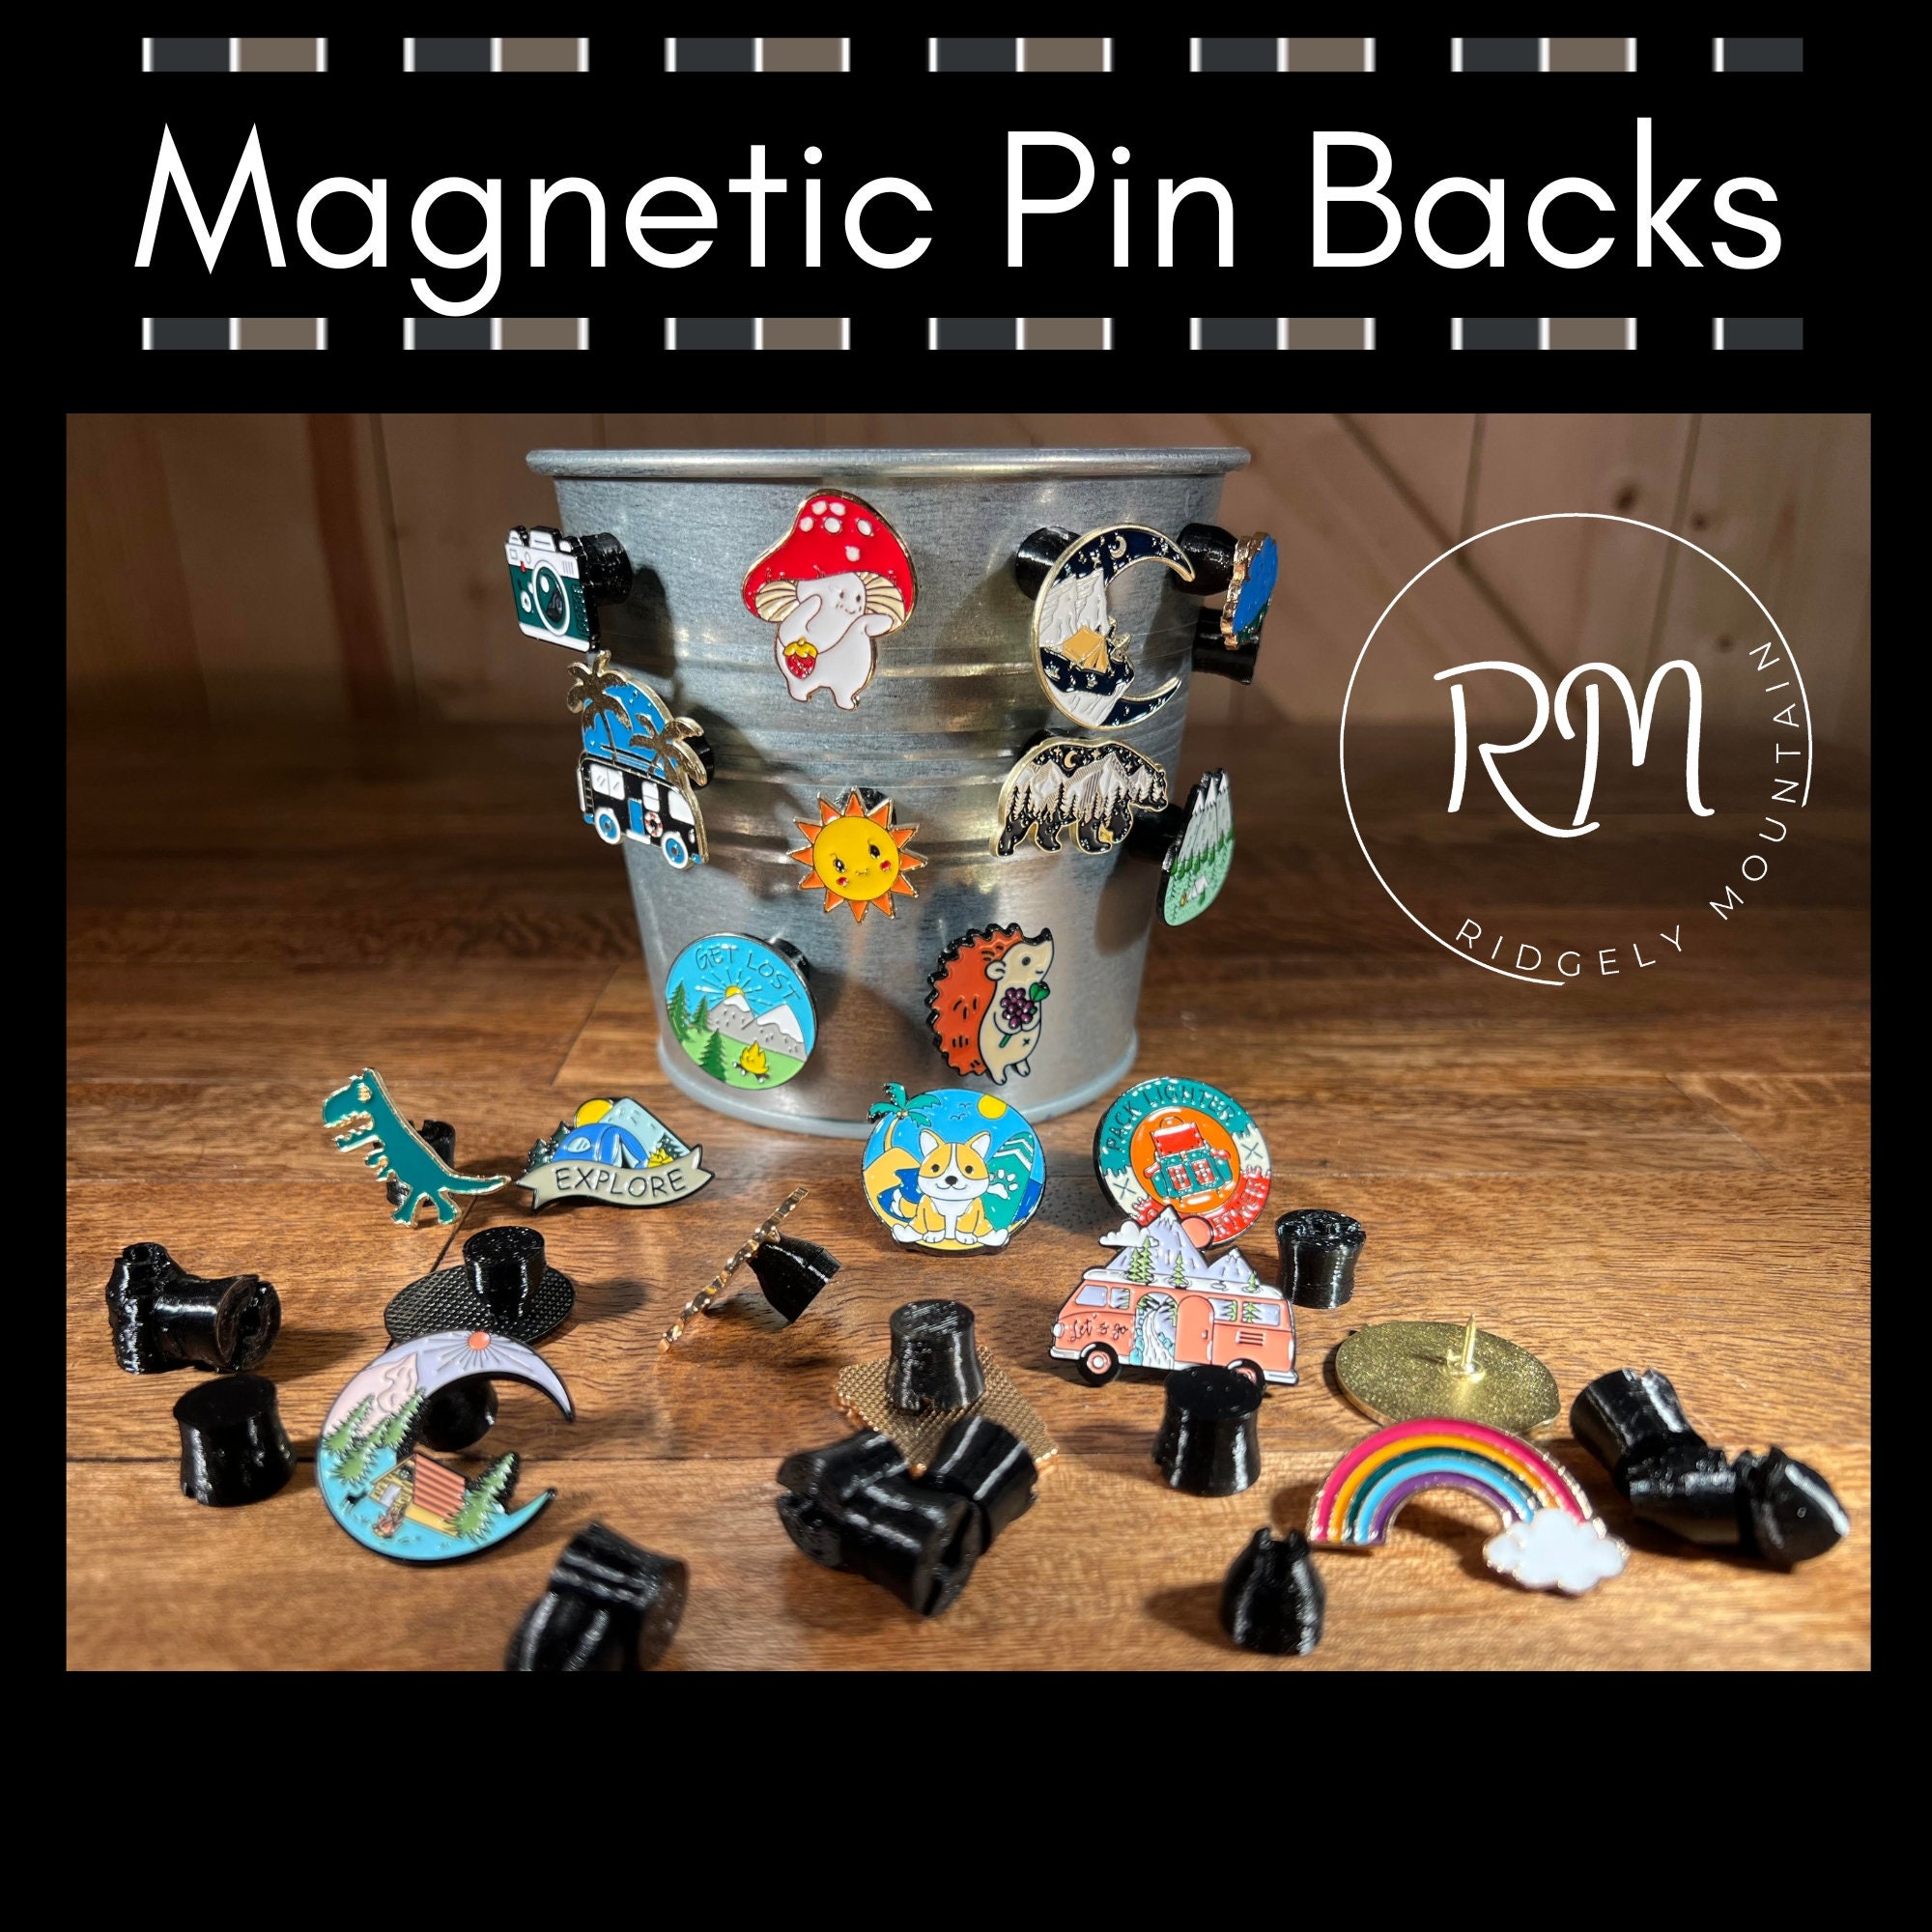 Magnetic Pin Back Description